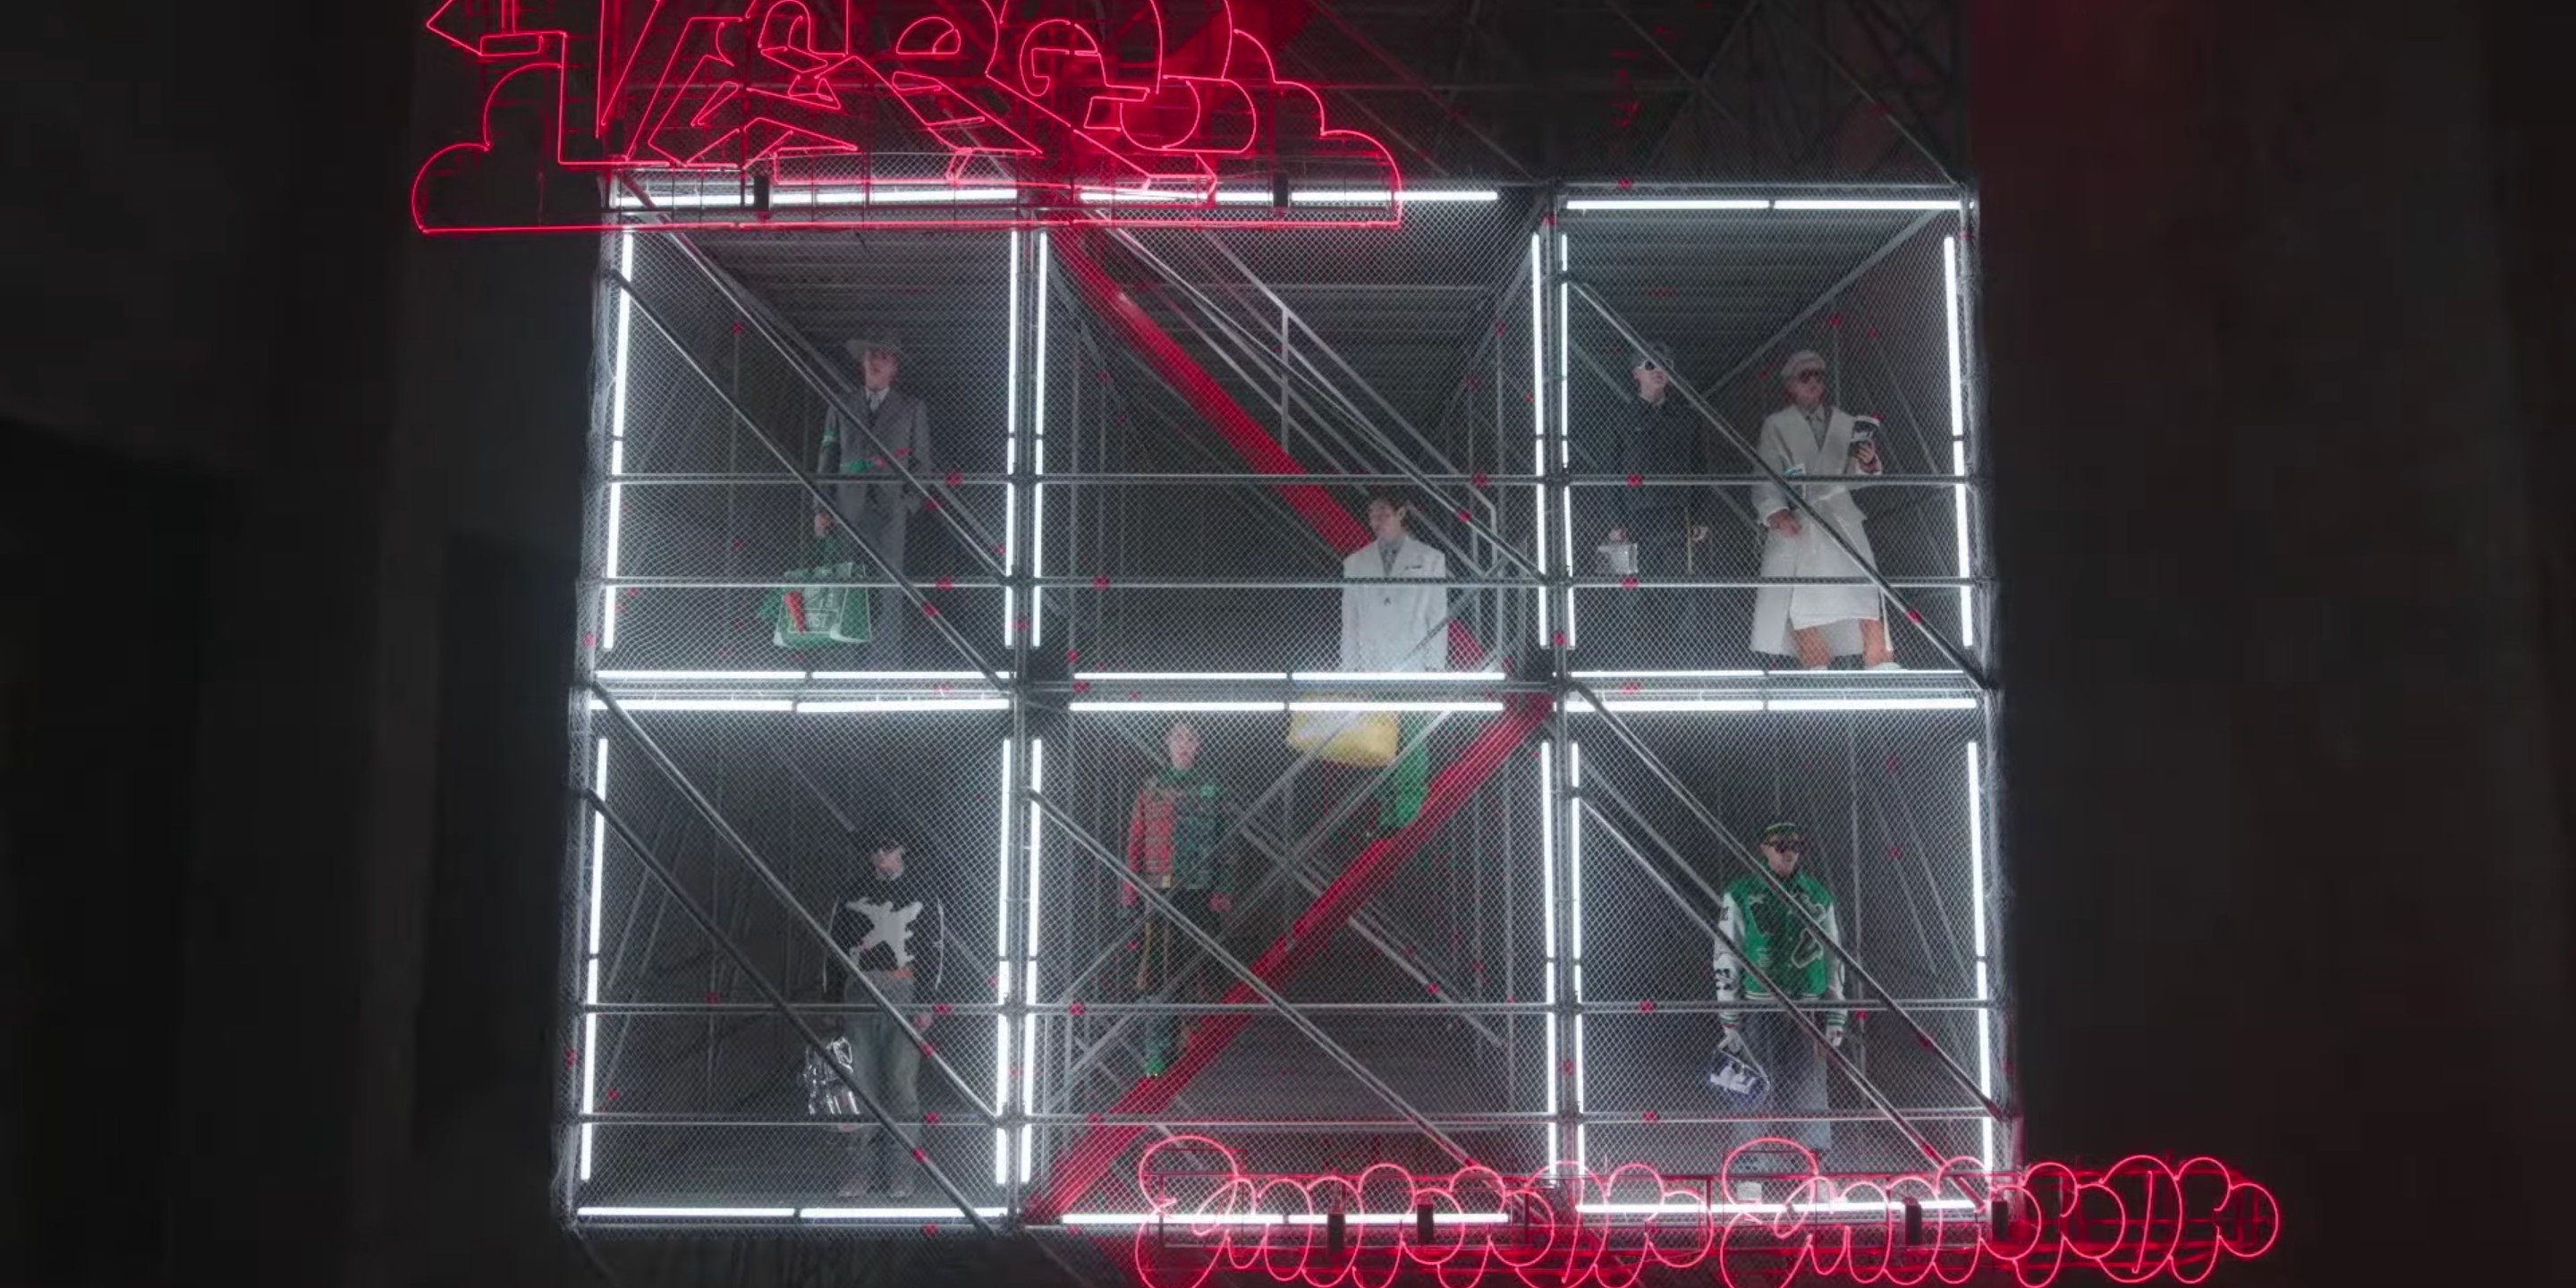 BTS x Louis Vuitton 2021: How to watch Bangtan on the catwalk